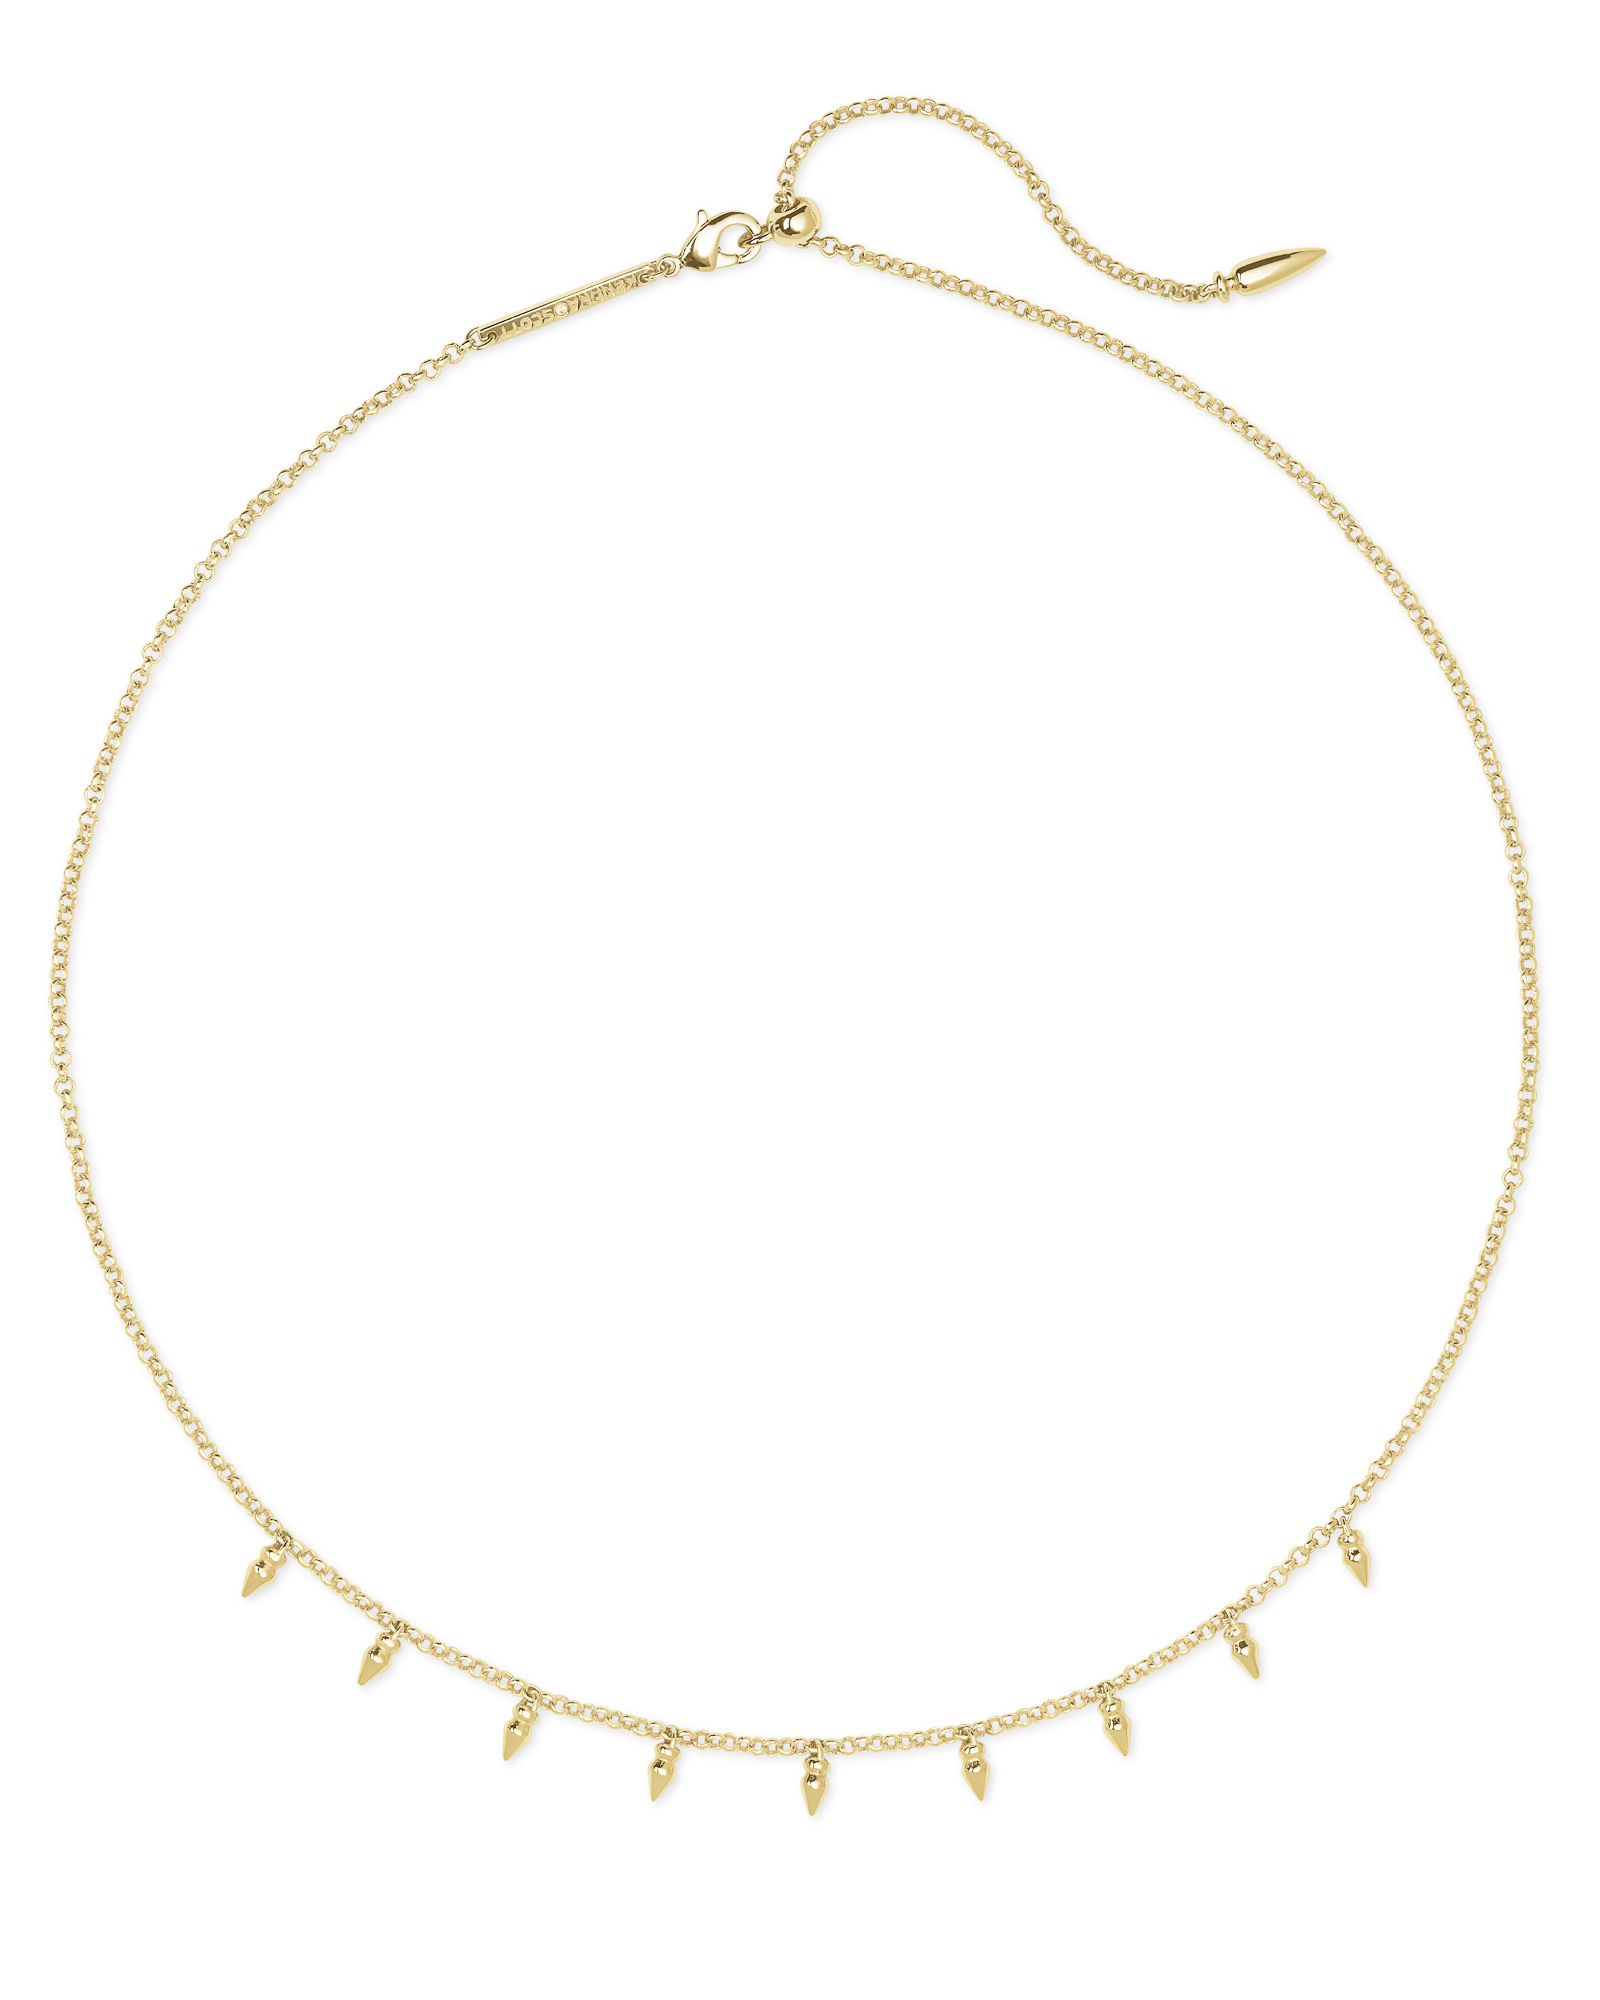 Addison Choker Necklace in Gold | Kendra Scott | Kendra Scott